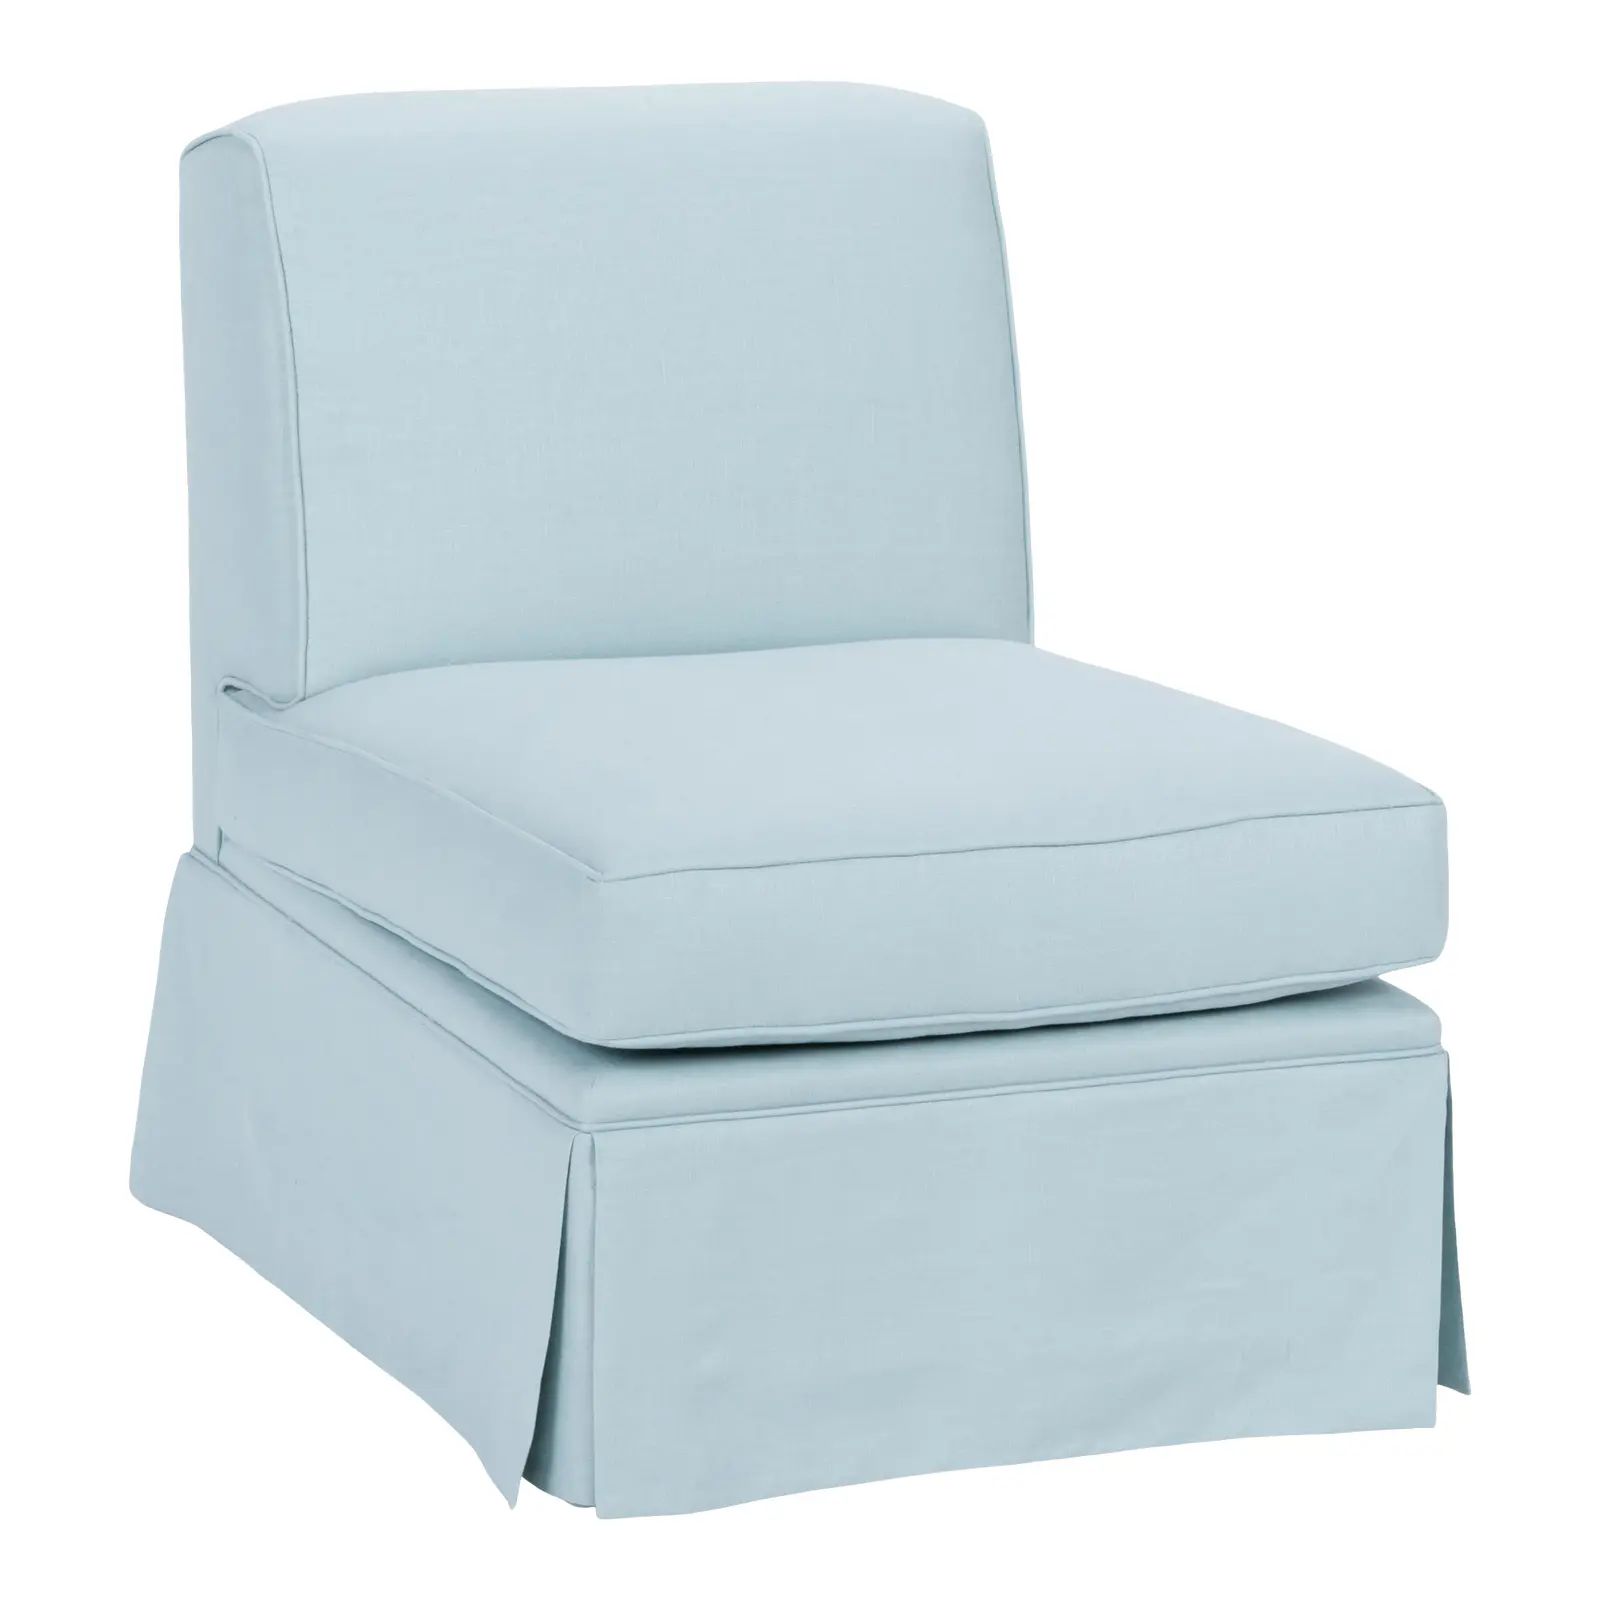 Casa Cosima Skirted Slipper Chair in Porcelain Blue | Chairish